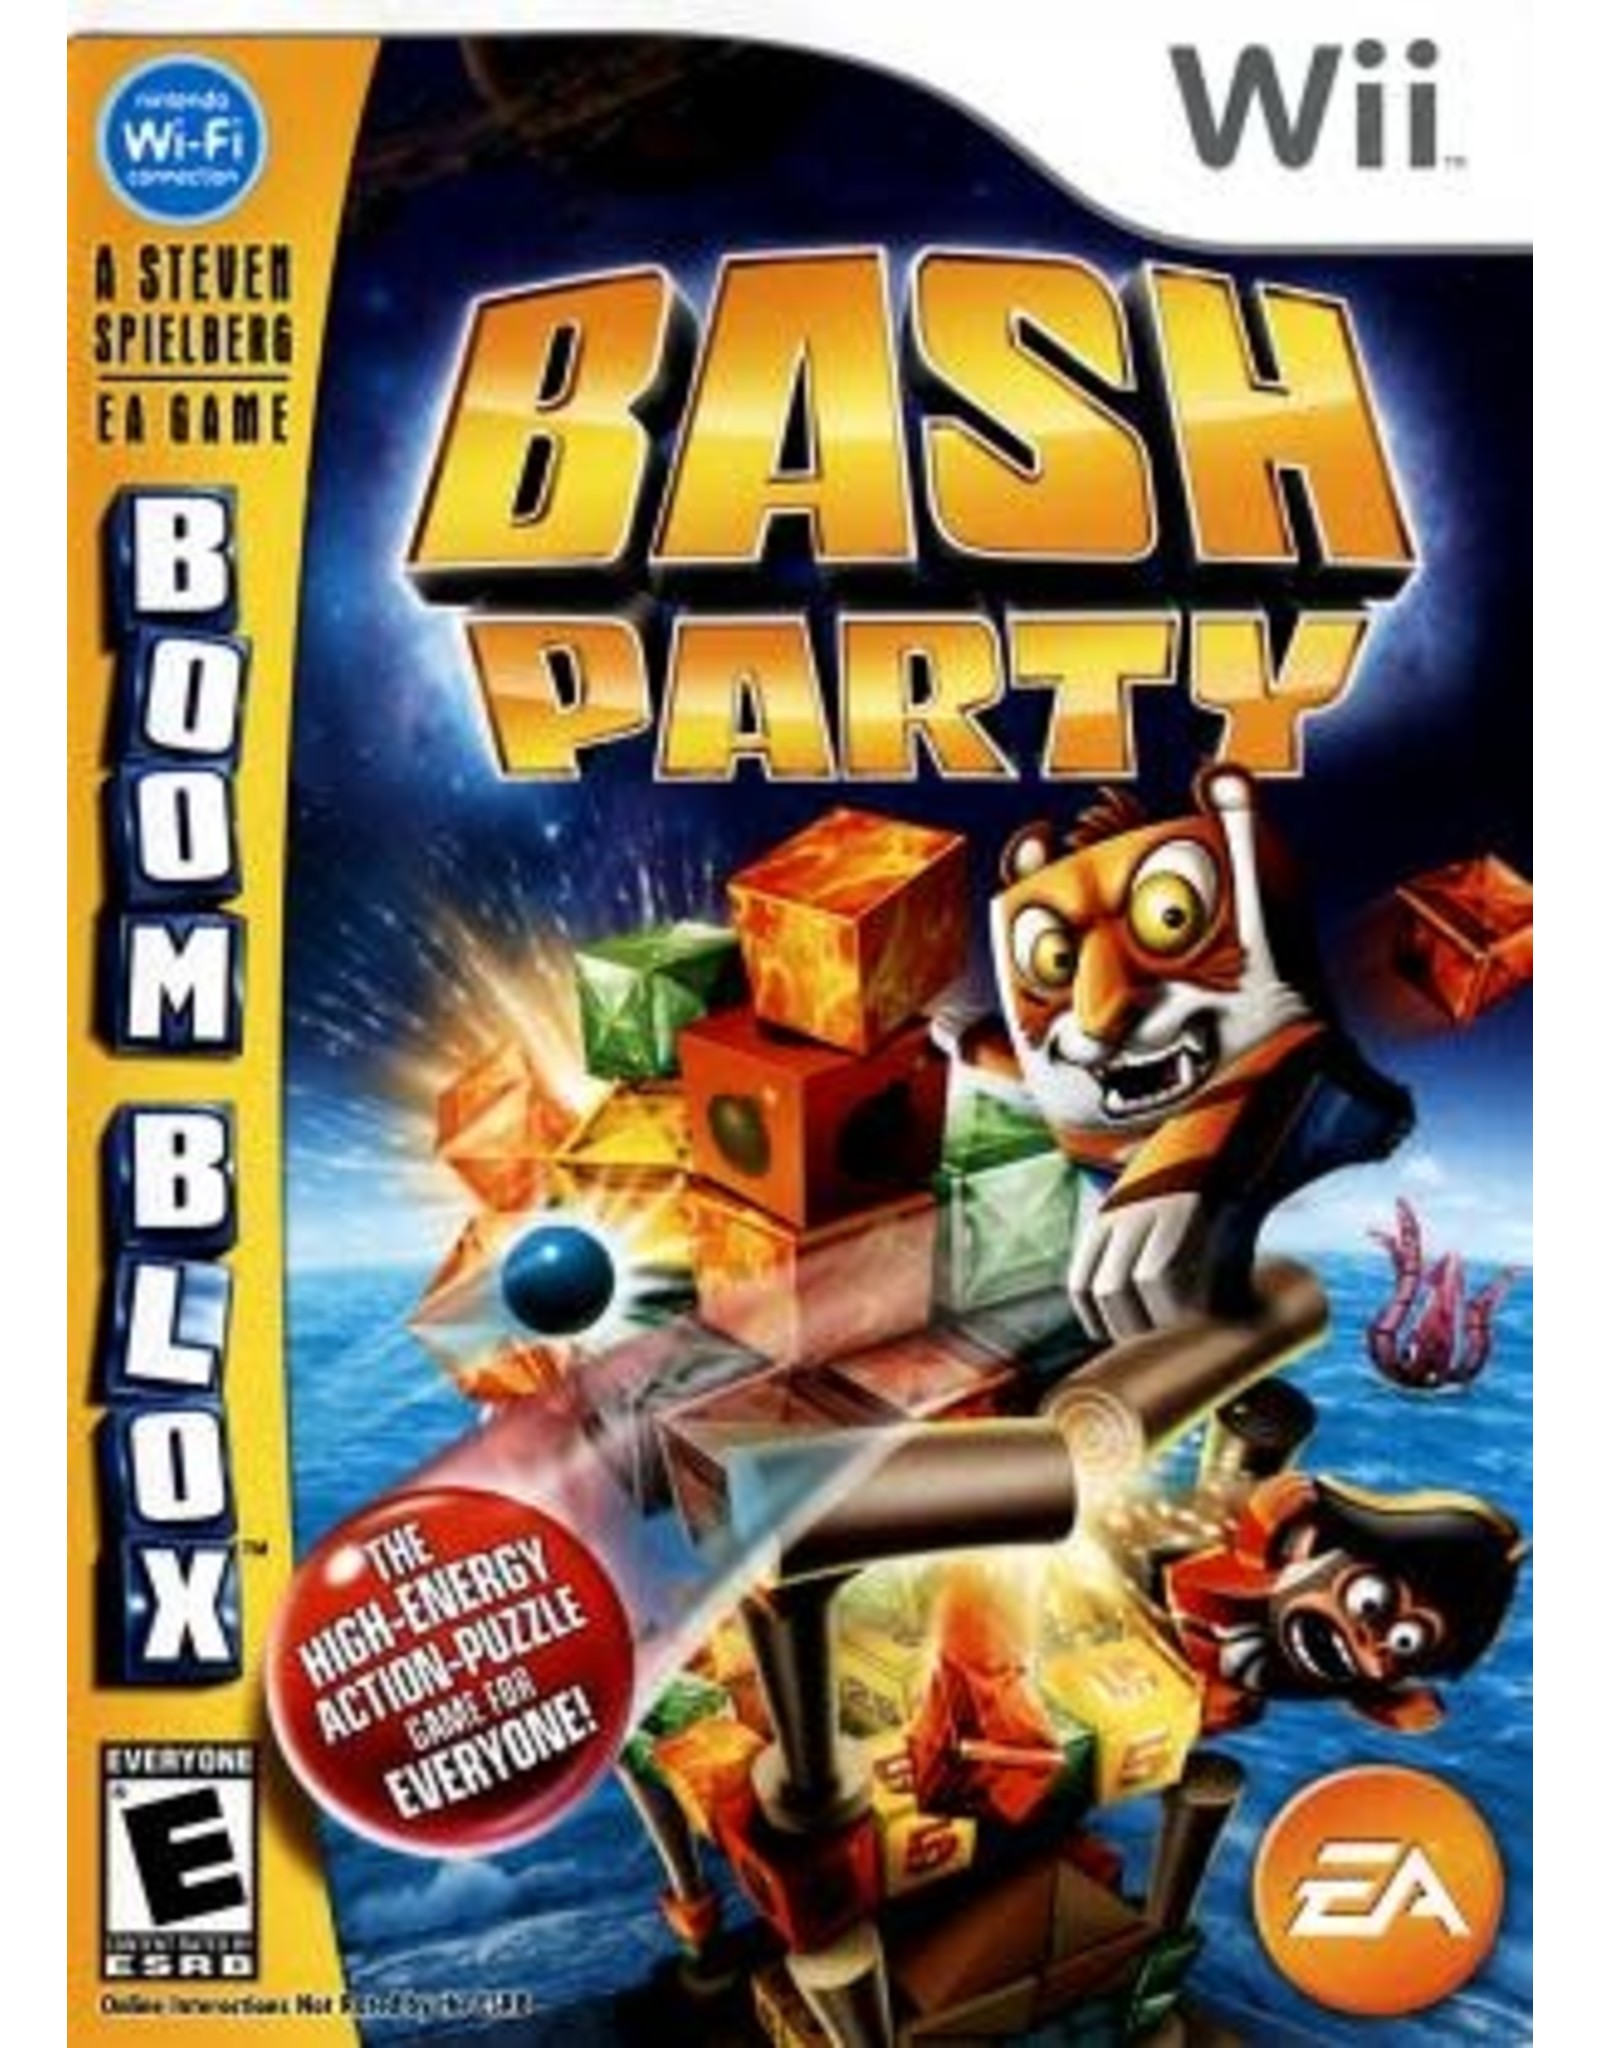 Wii Boom Blox Bash Party (CiB)